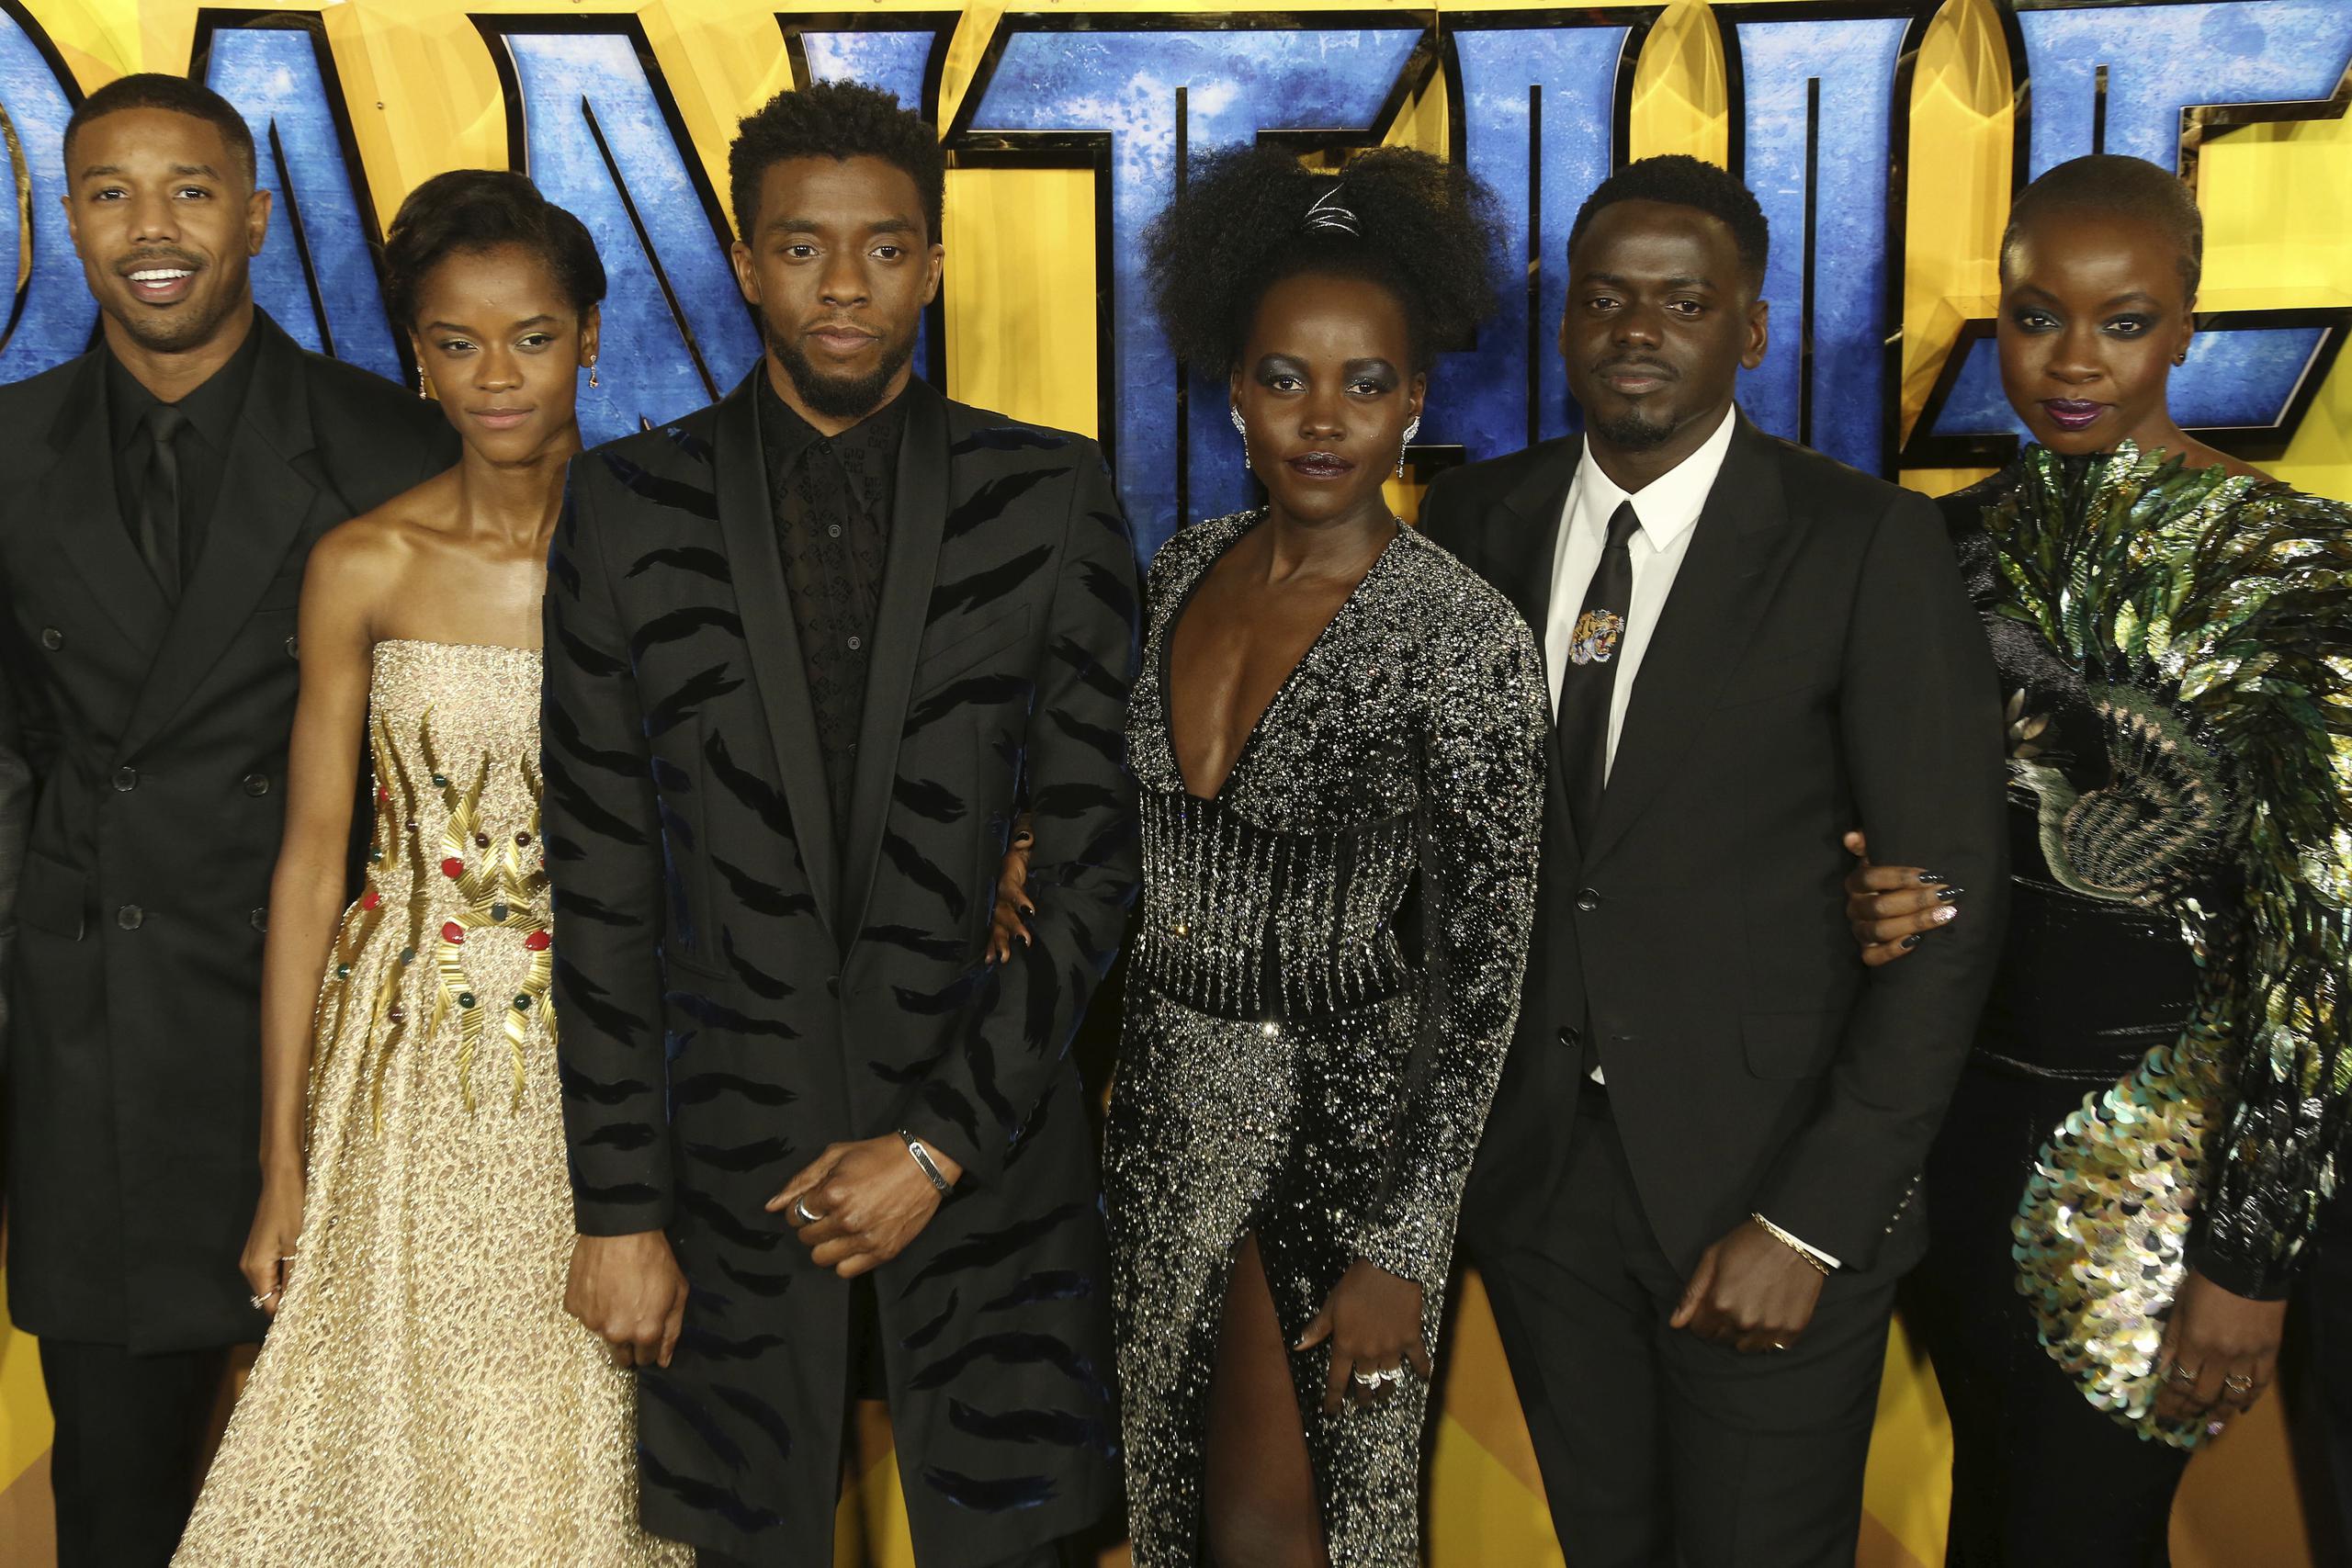 Los actores Michael B. Jordan, Letitia Wright, Chadwick Boseman, Lupita Nyong'o, Daniel Kaluuya y Danai Gurira, parte del elenco de "Black Panther".